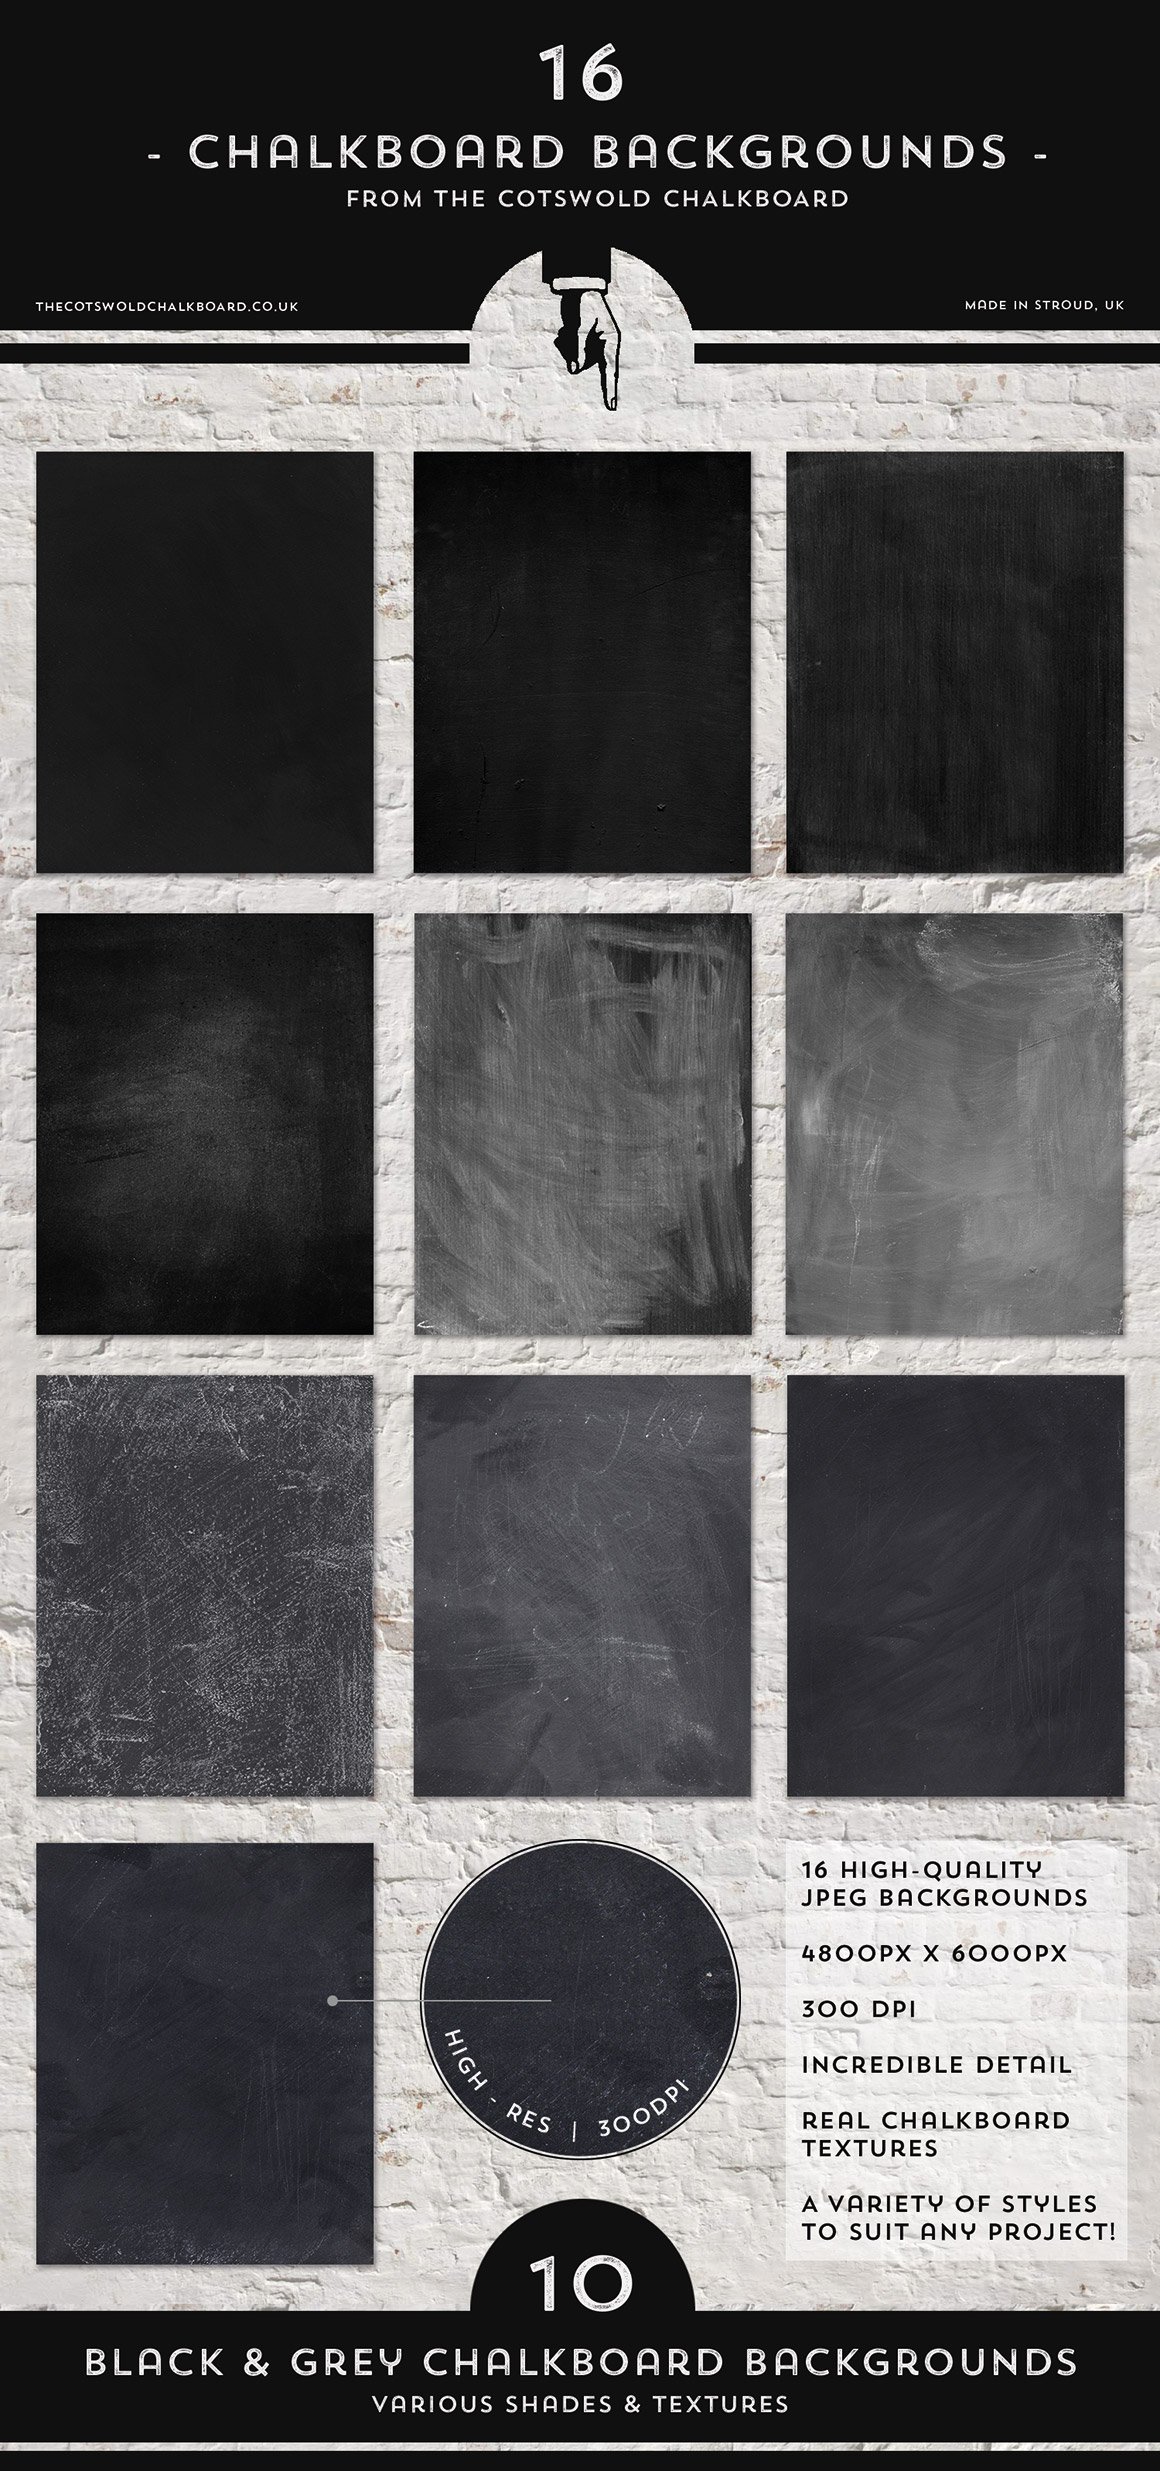 16 Authentic Chalkboard Textures